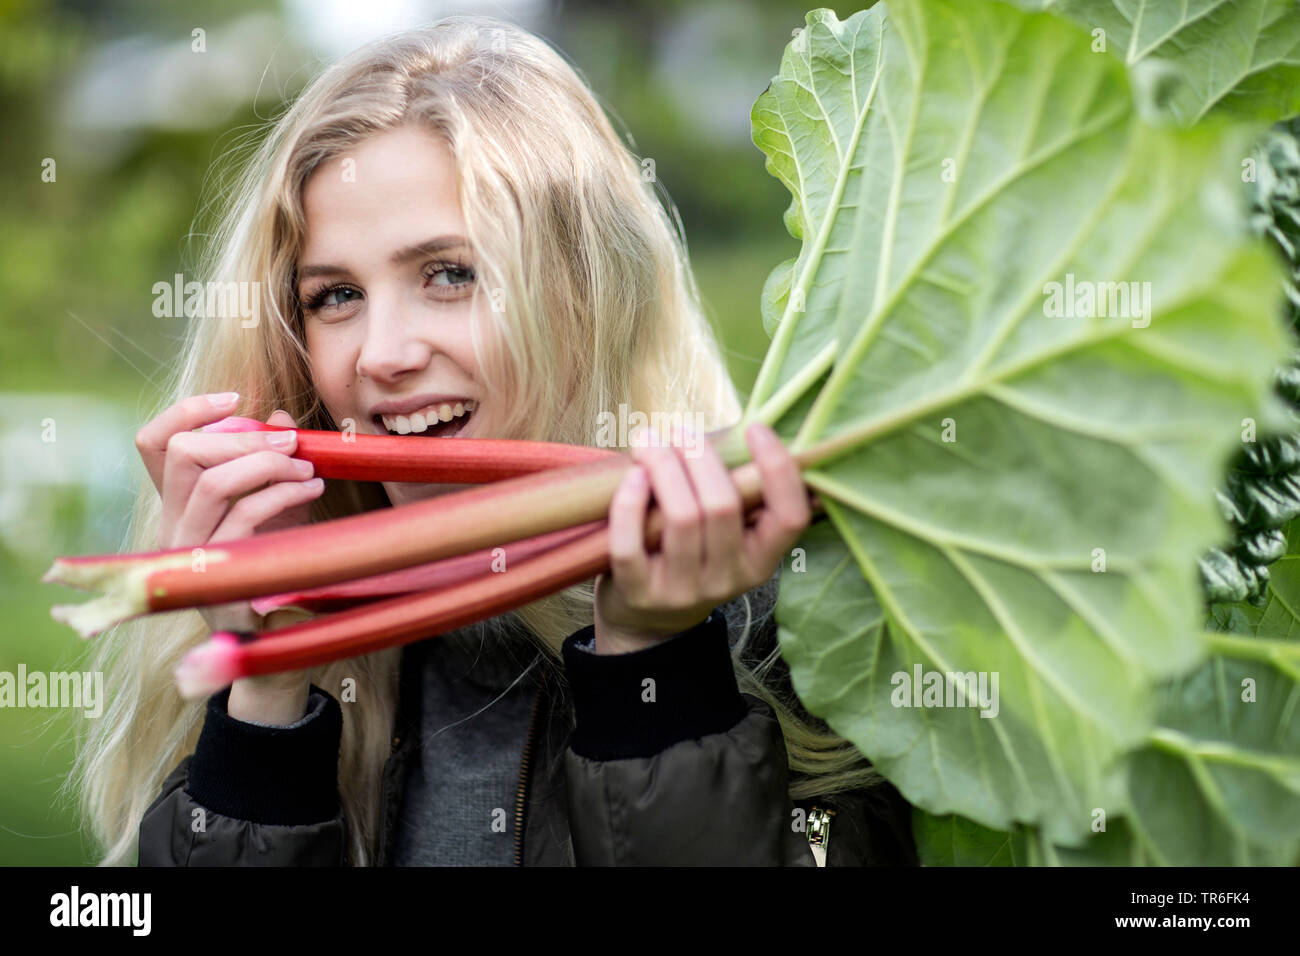 rhubarb (Rheum rhabarbarum), young blond woman biting into fresh picked rhubarb, Germany Stock Photo